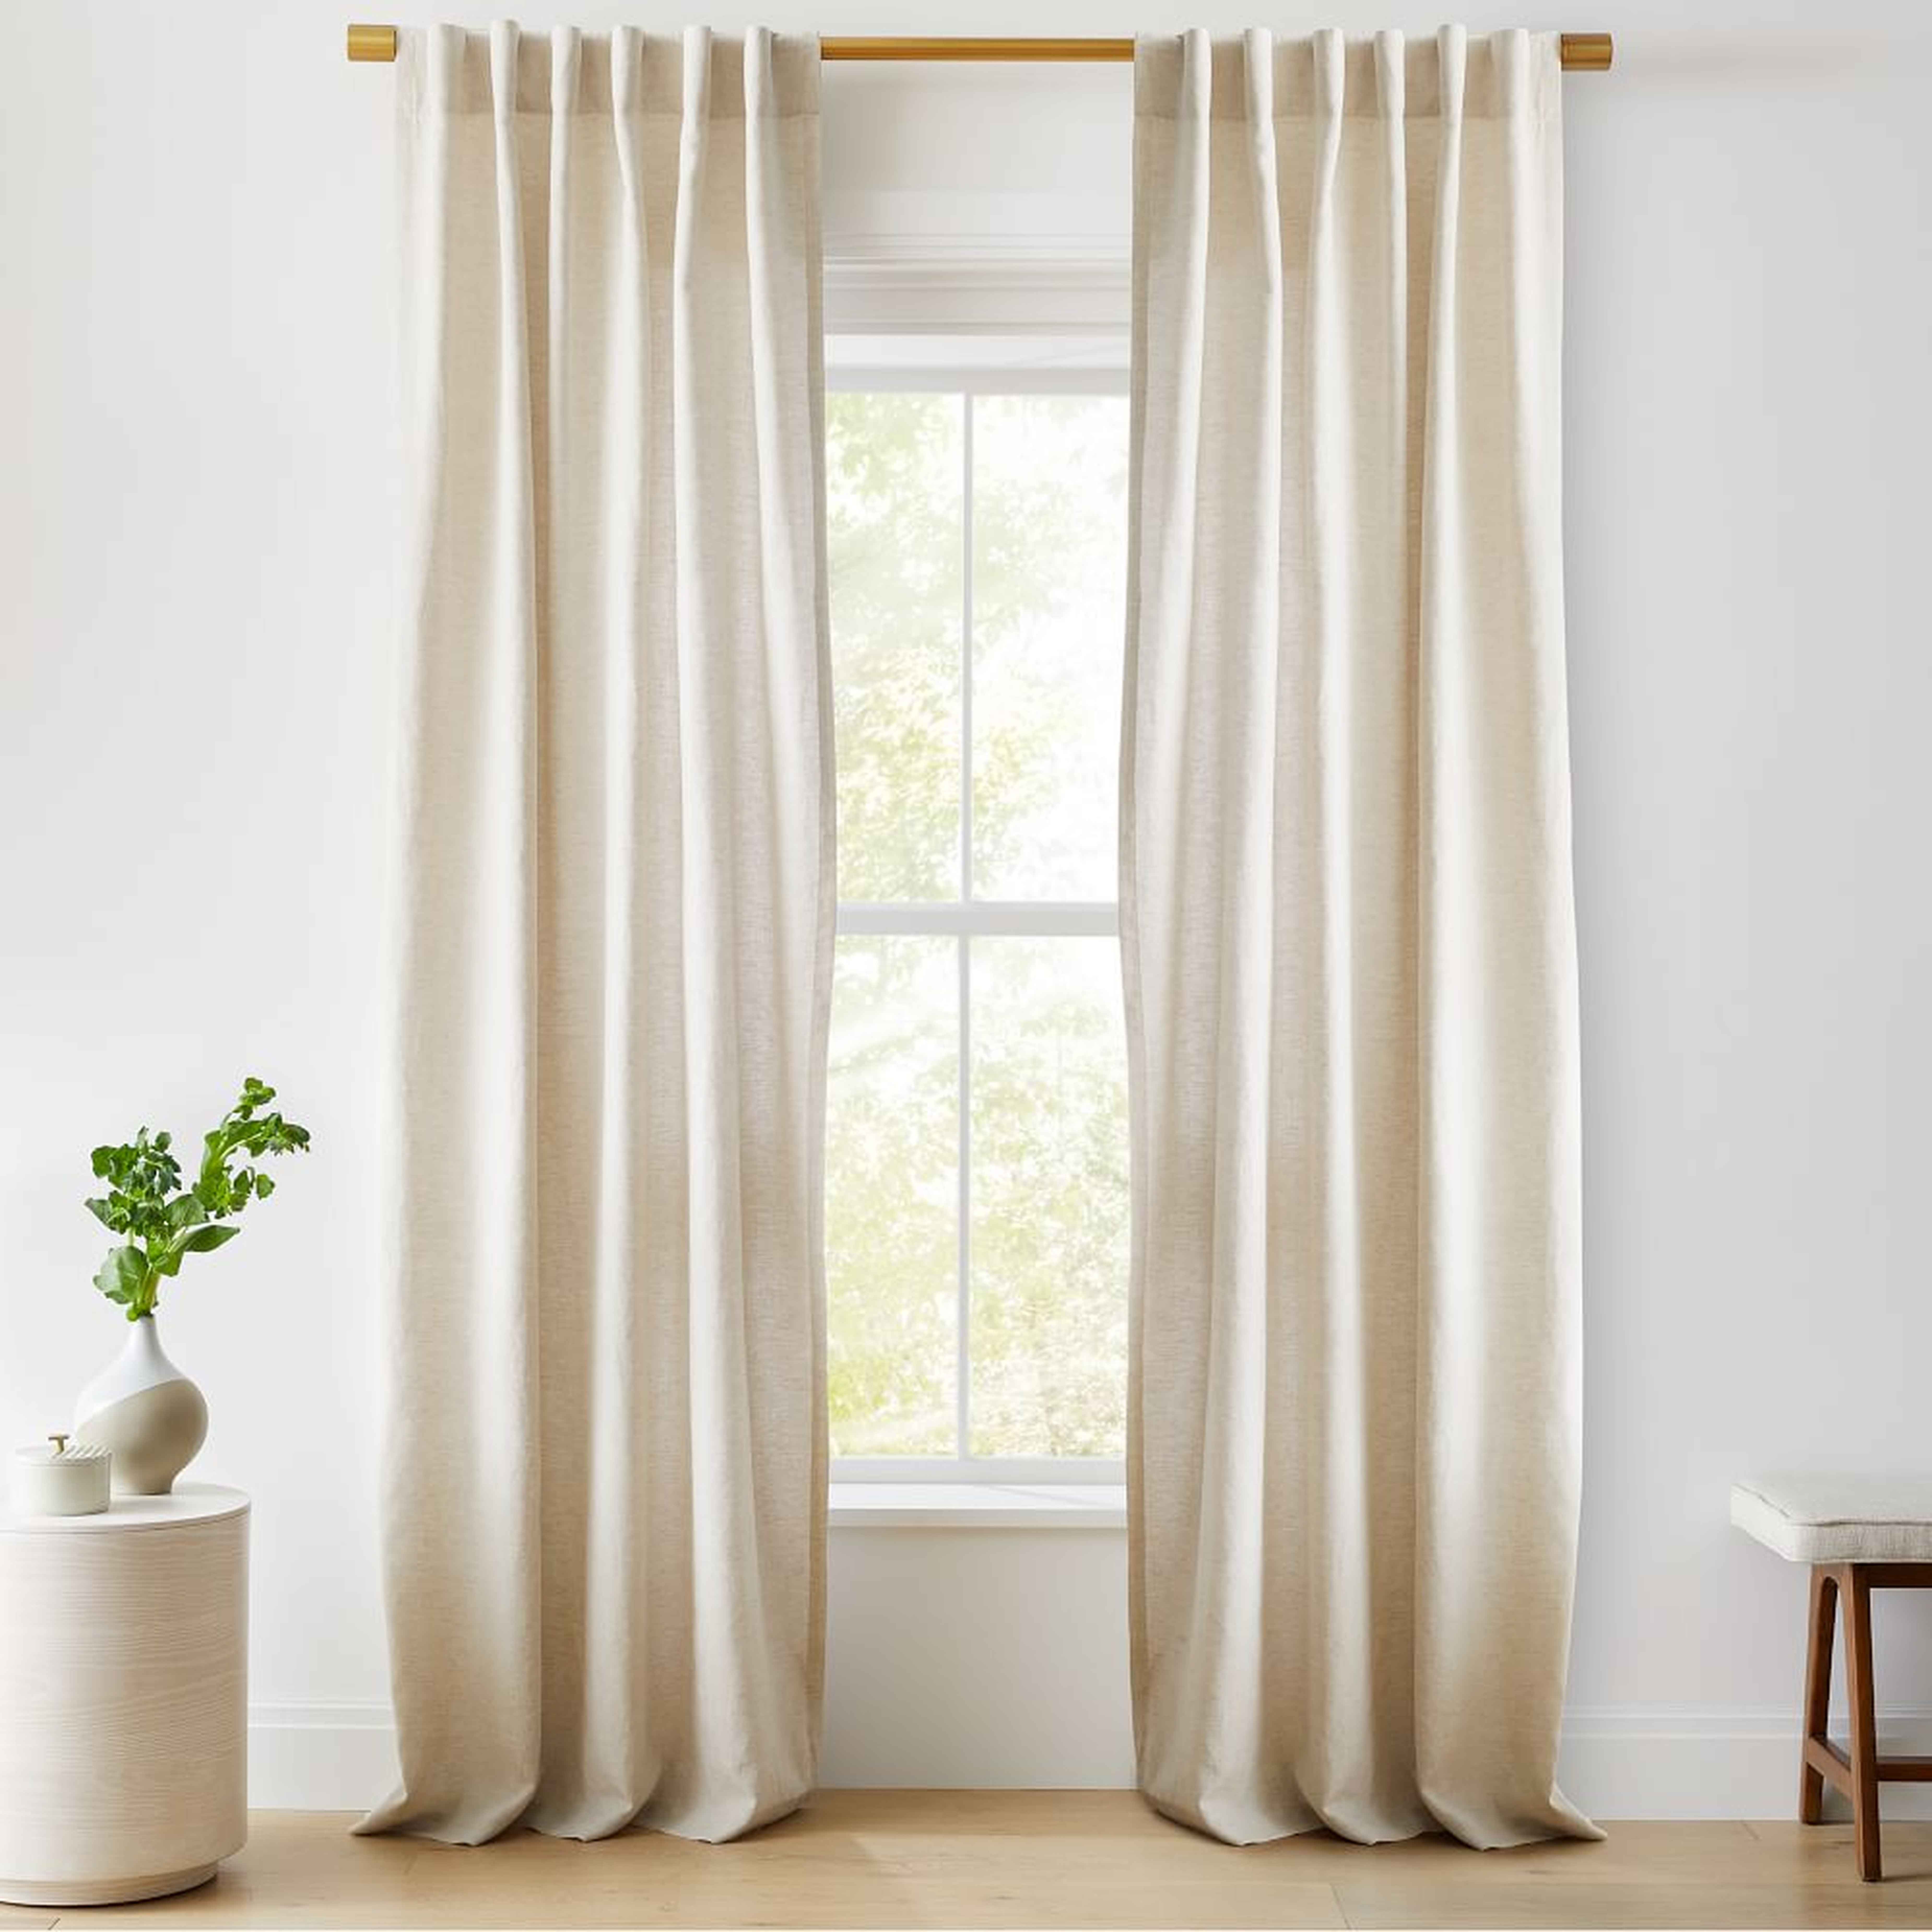 Custom Size Solid European Linen Curtain, Natural, 54 wide x 96 long - West Elm